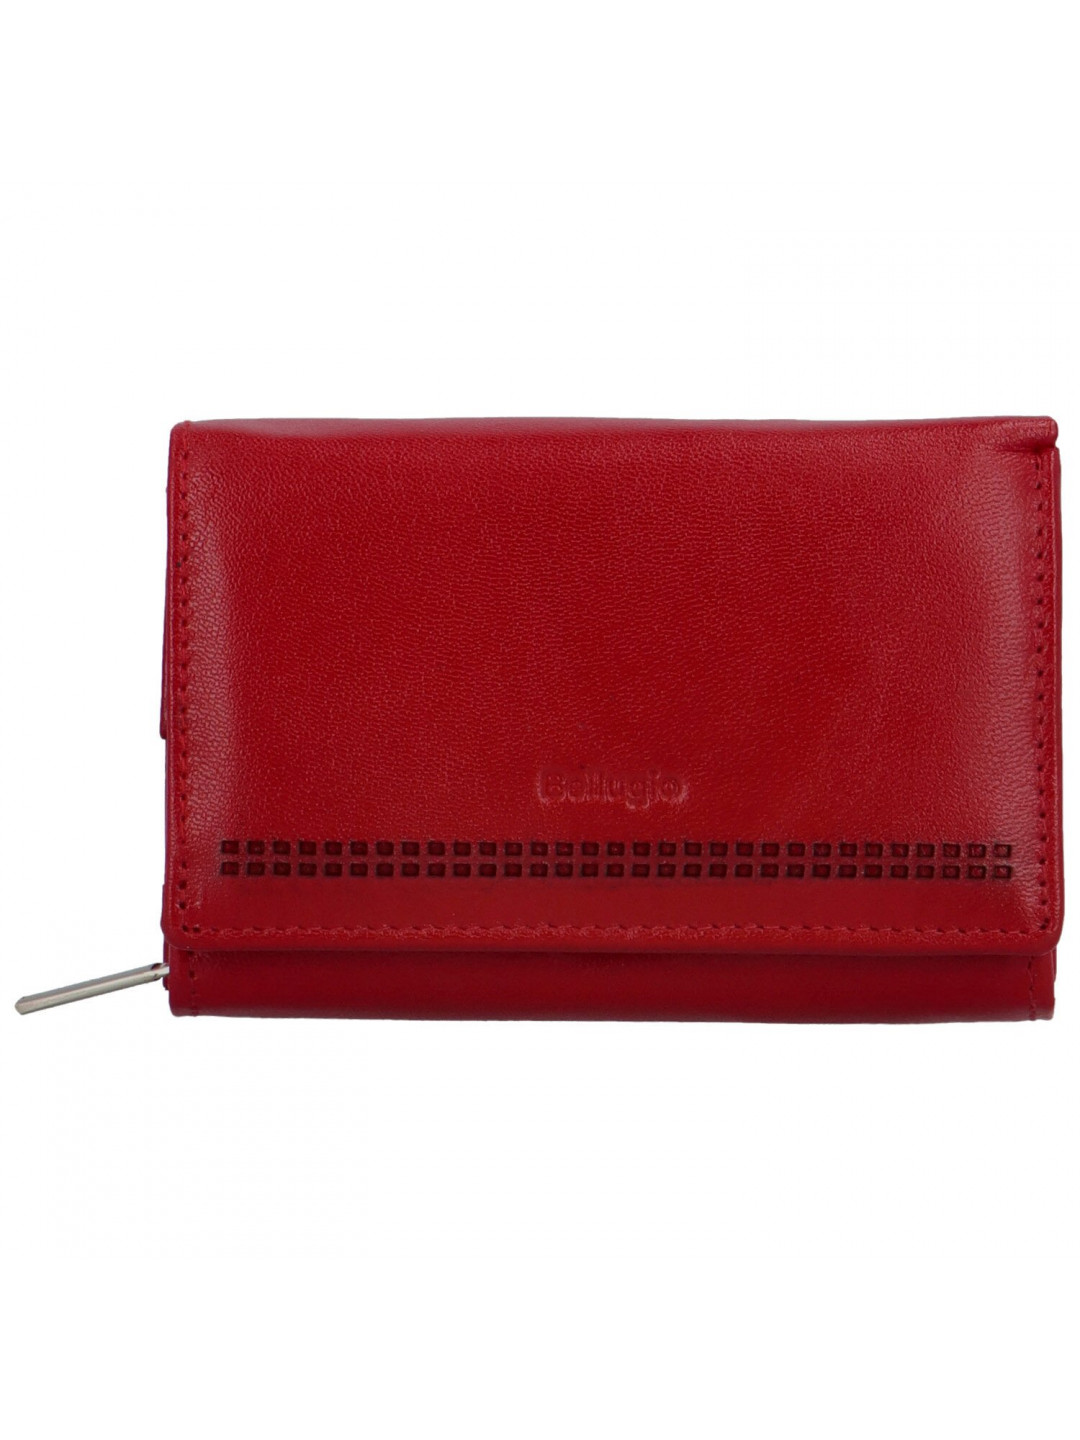 Dámská kožená malá peněženka Bellugio Gialla tmavě červená